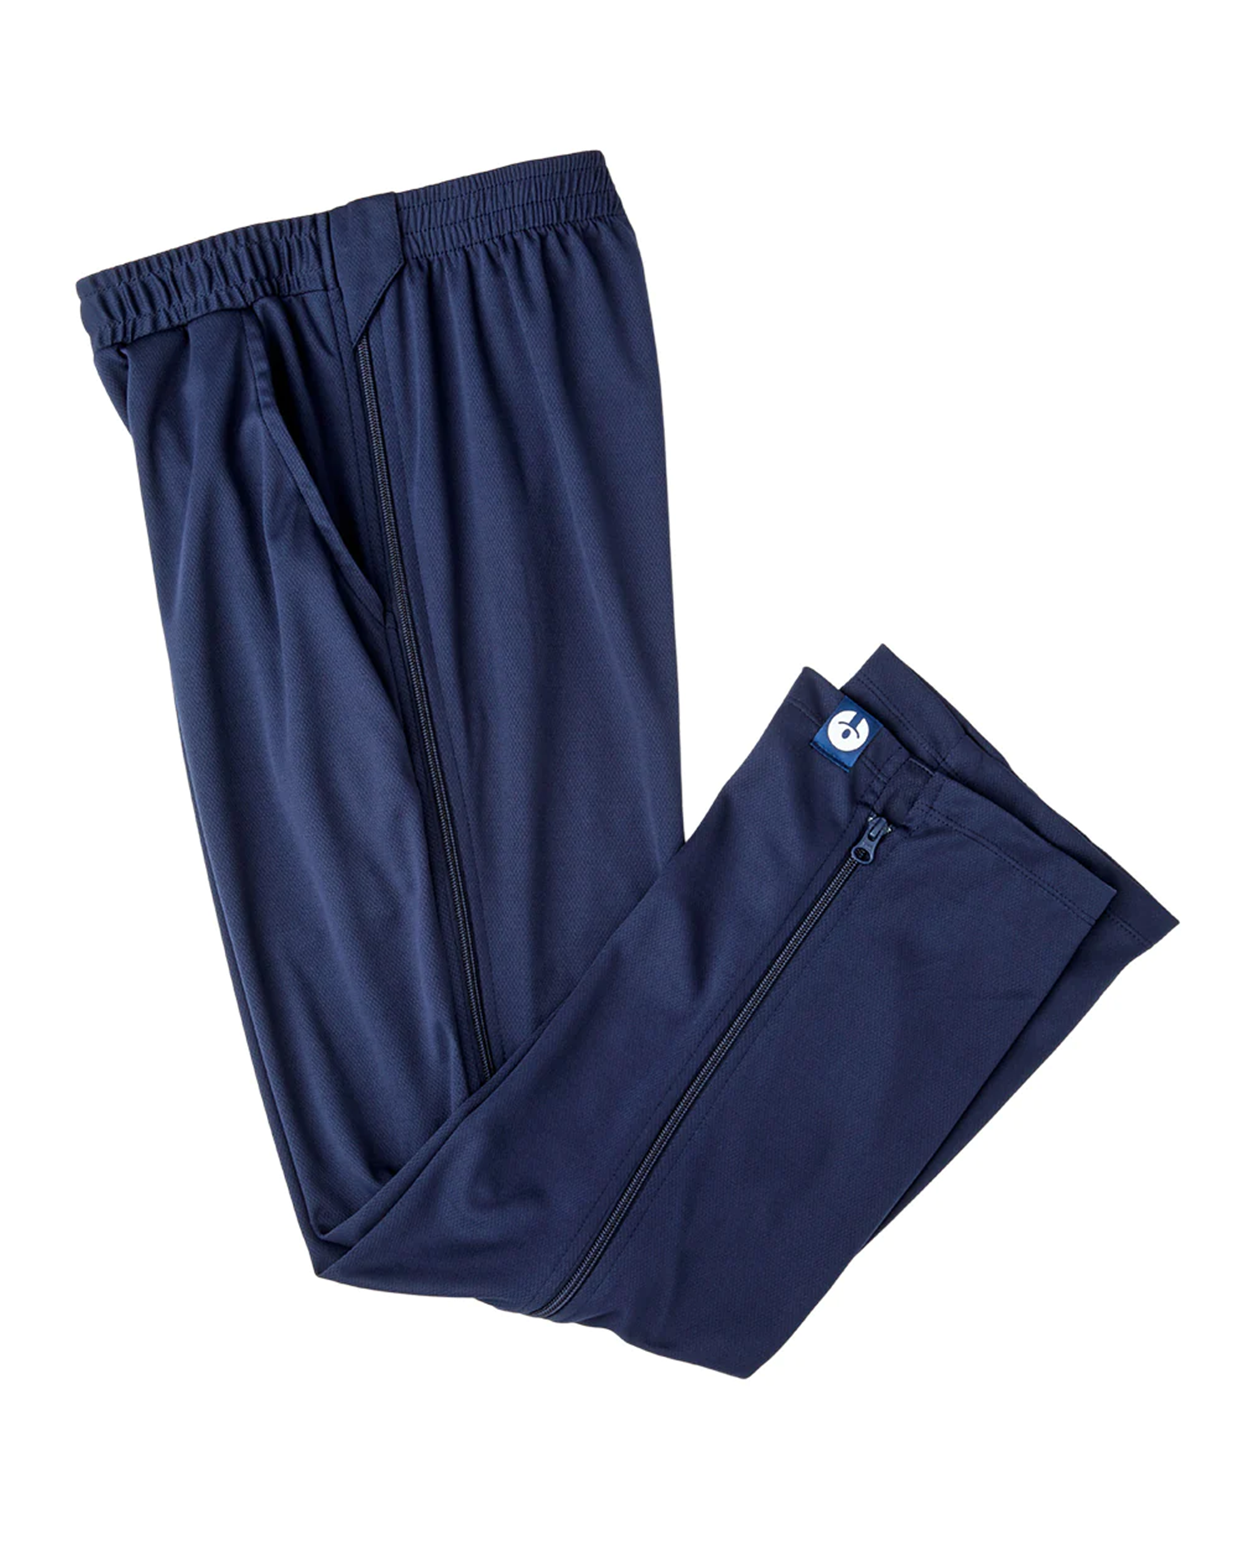 Adaptive elastic waist pants with pockets and decorative zipper